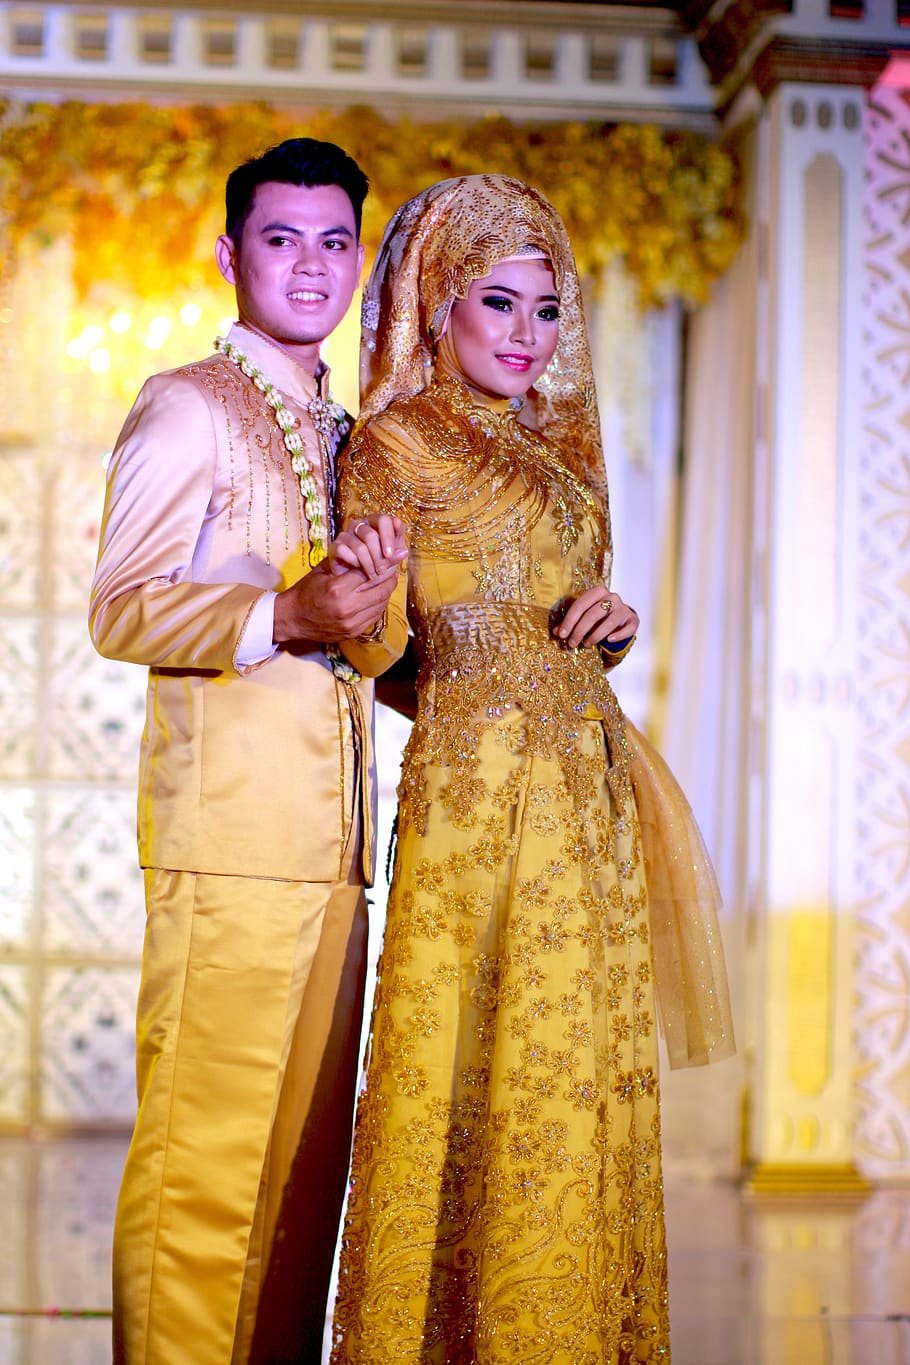 Cultural Wedding Veils From Around the World — NK Bride